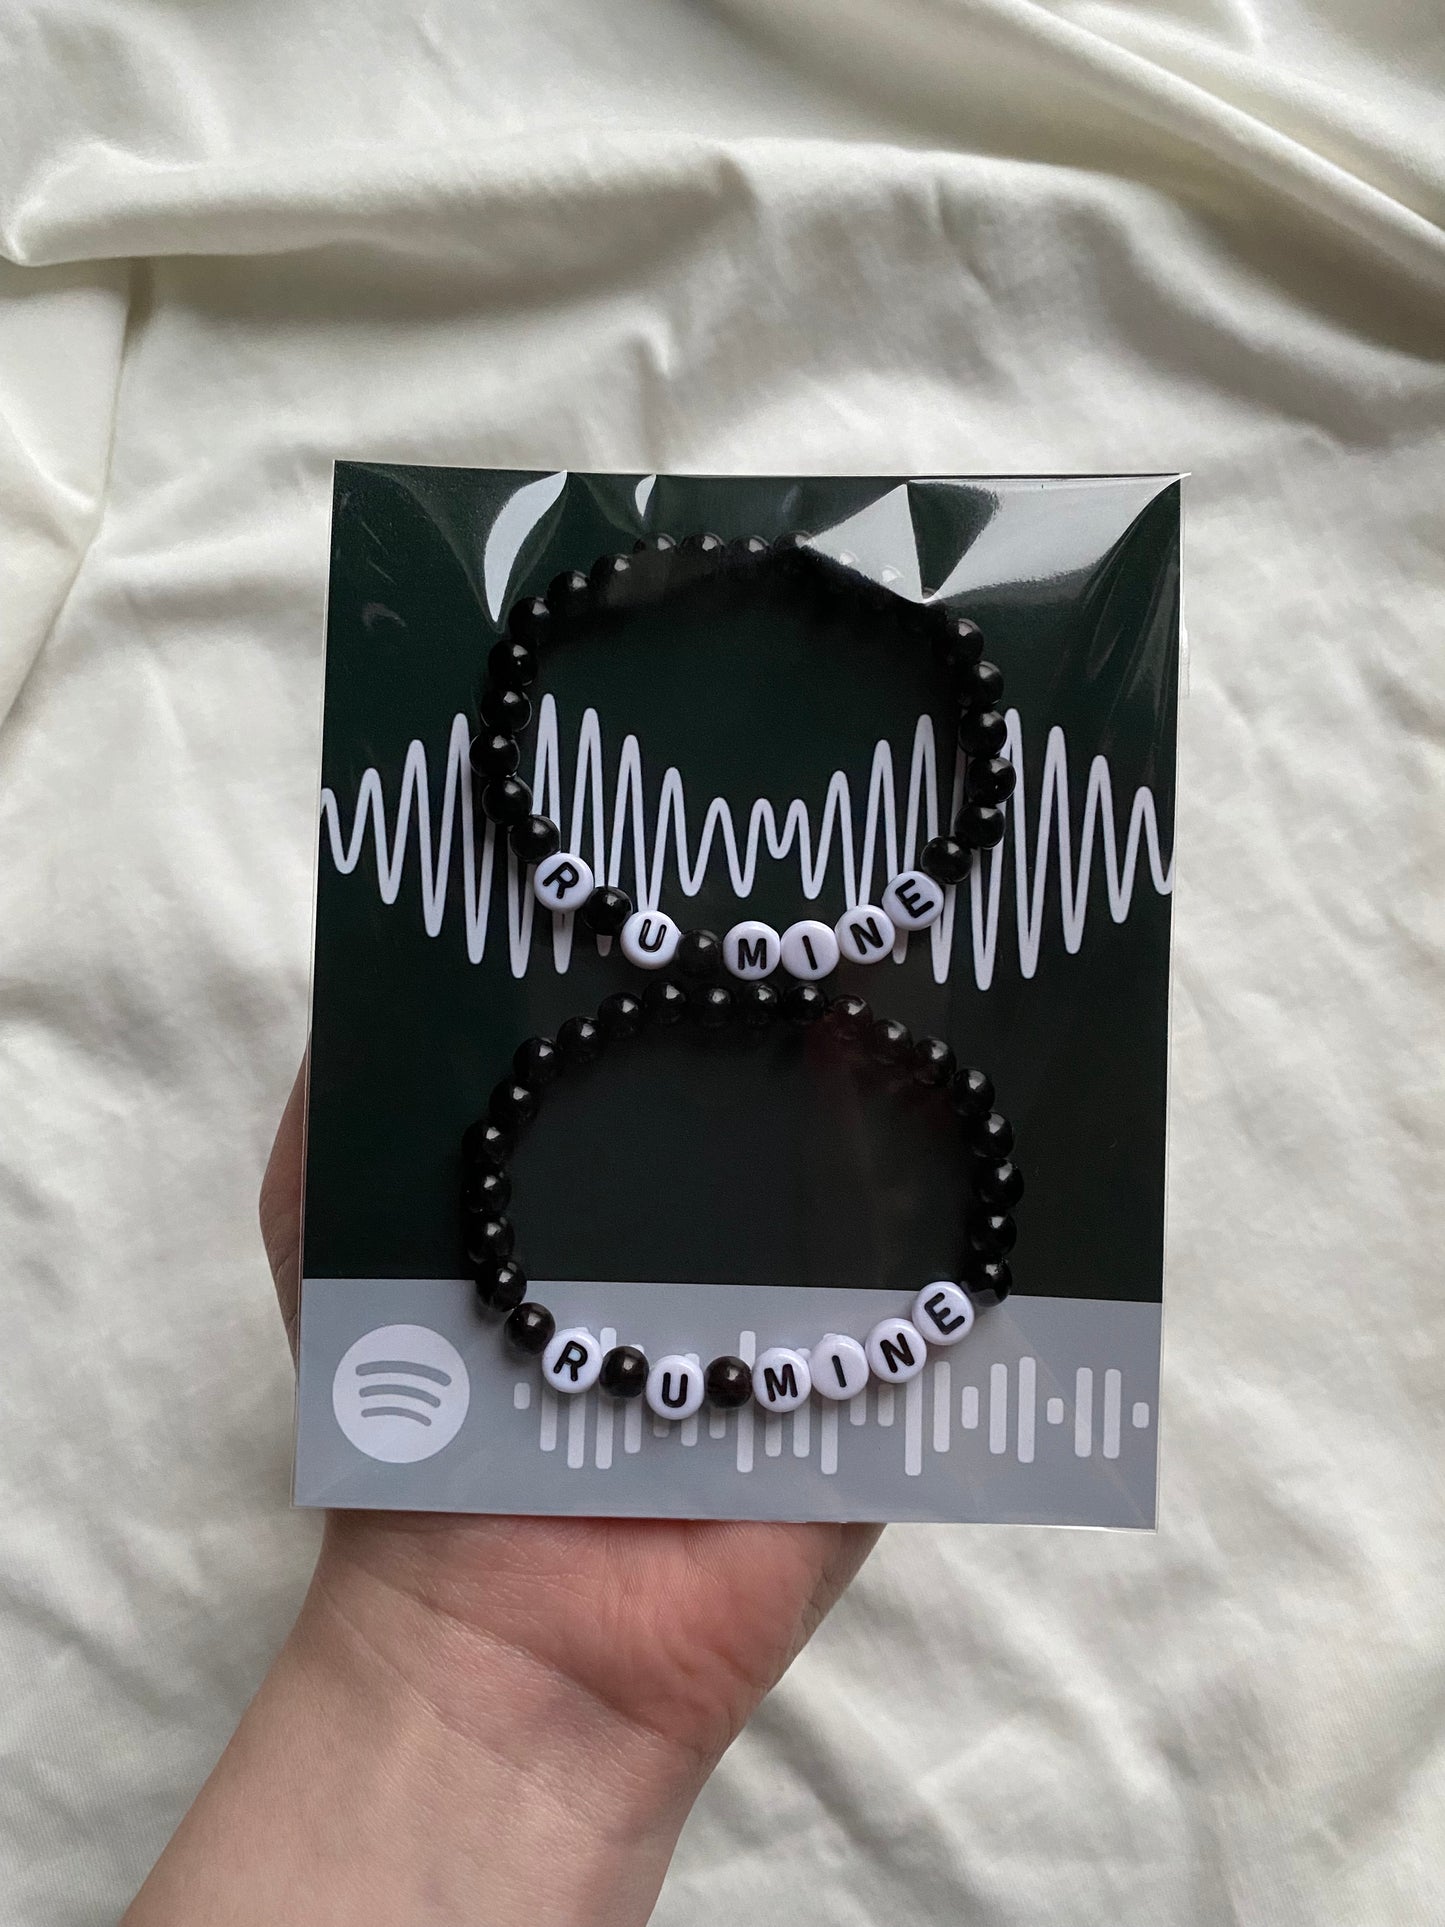 R u mine by Arctic Monkeys matching bracelets